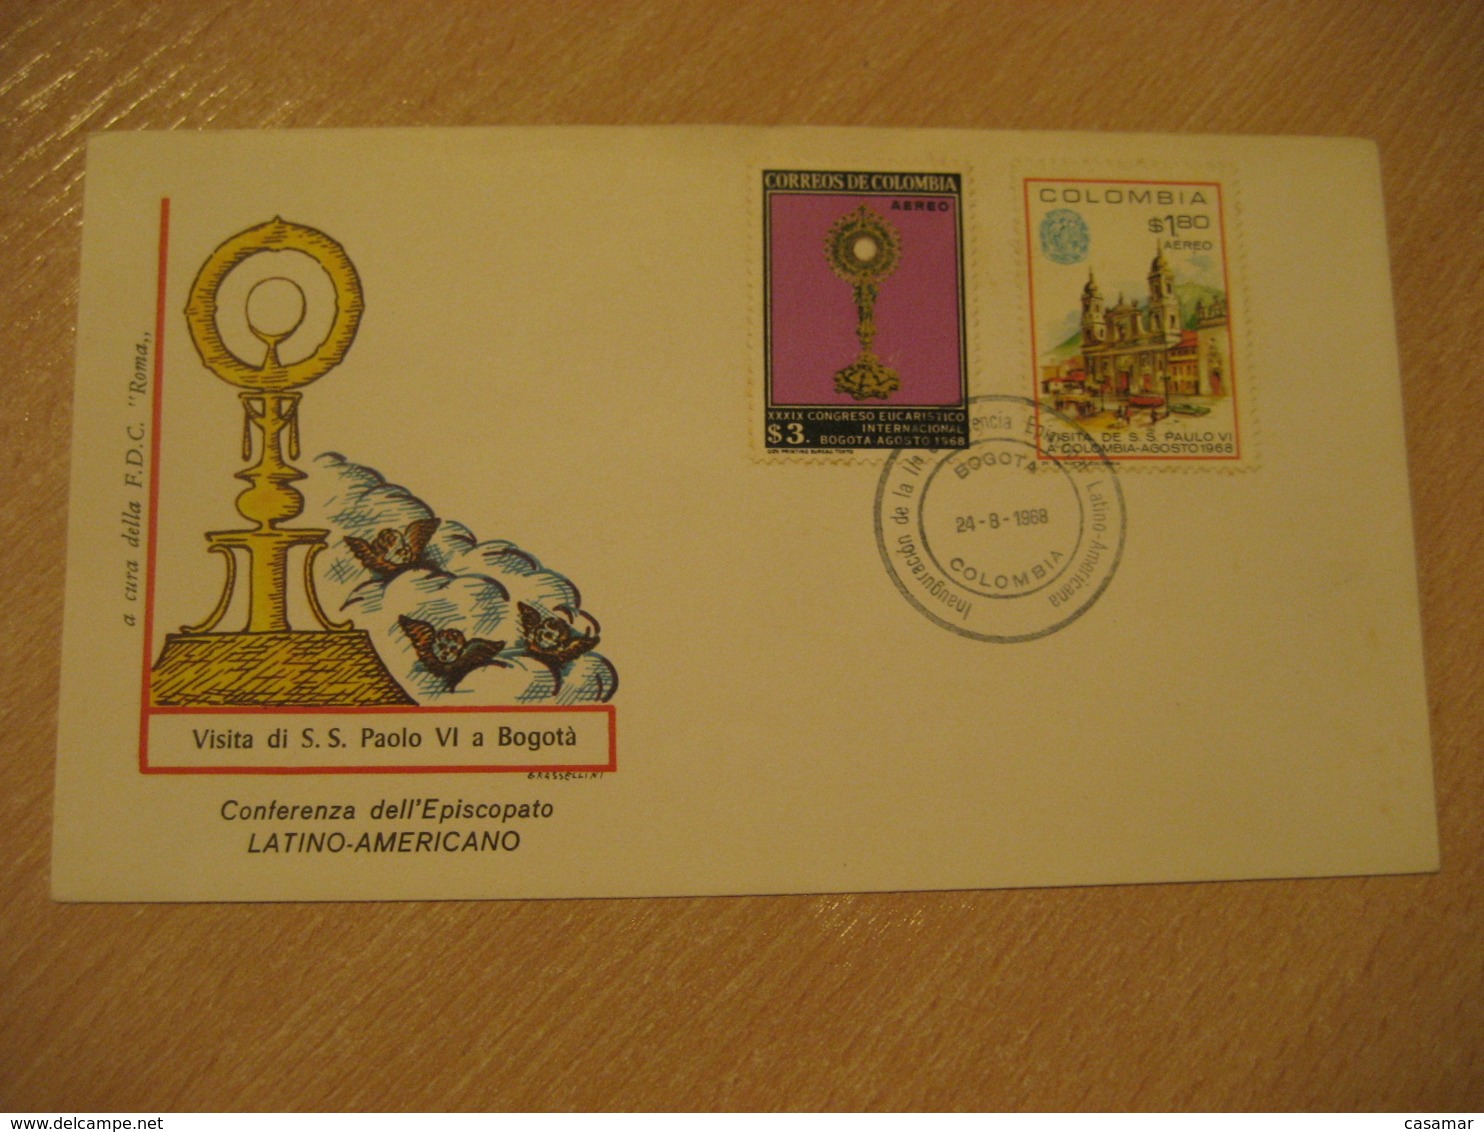 BOGOTA 1968 Visit Paul VI Pablo VI Pope Papa Conferencia Episcopal Correo Aereo Air Mail Cancel Cover COLOMBIA - Colombie